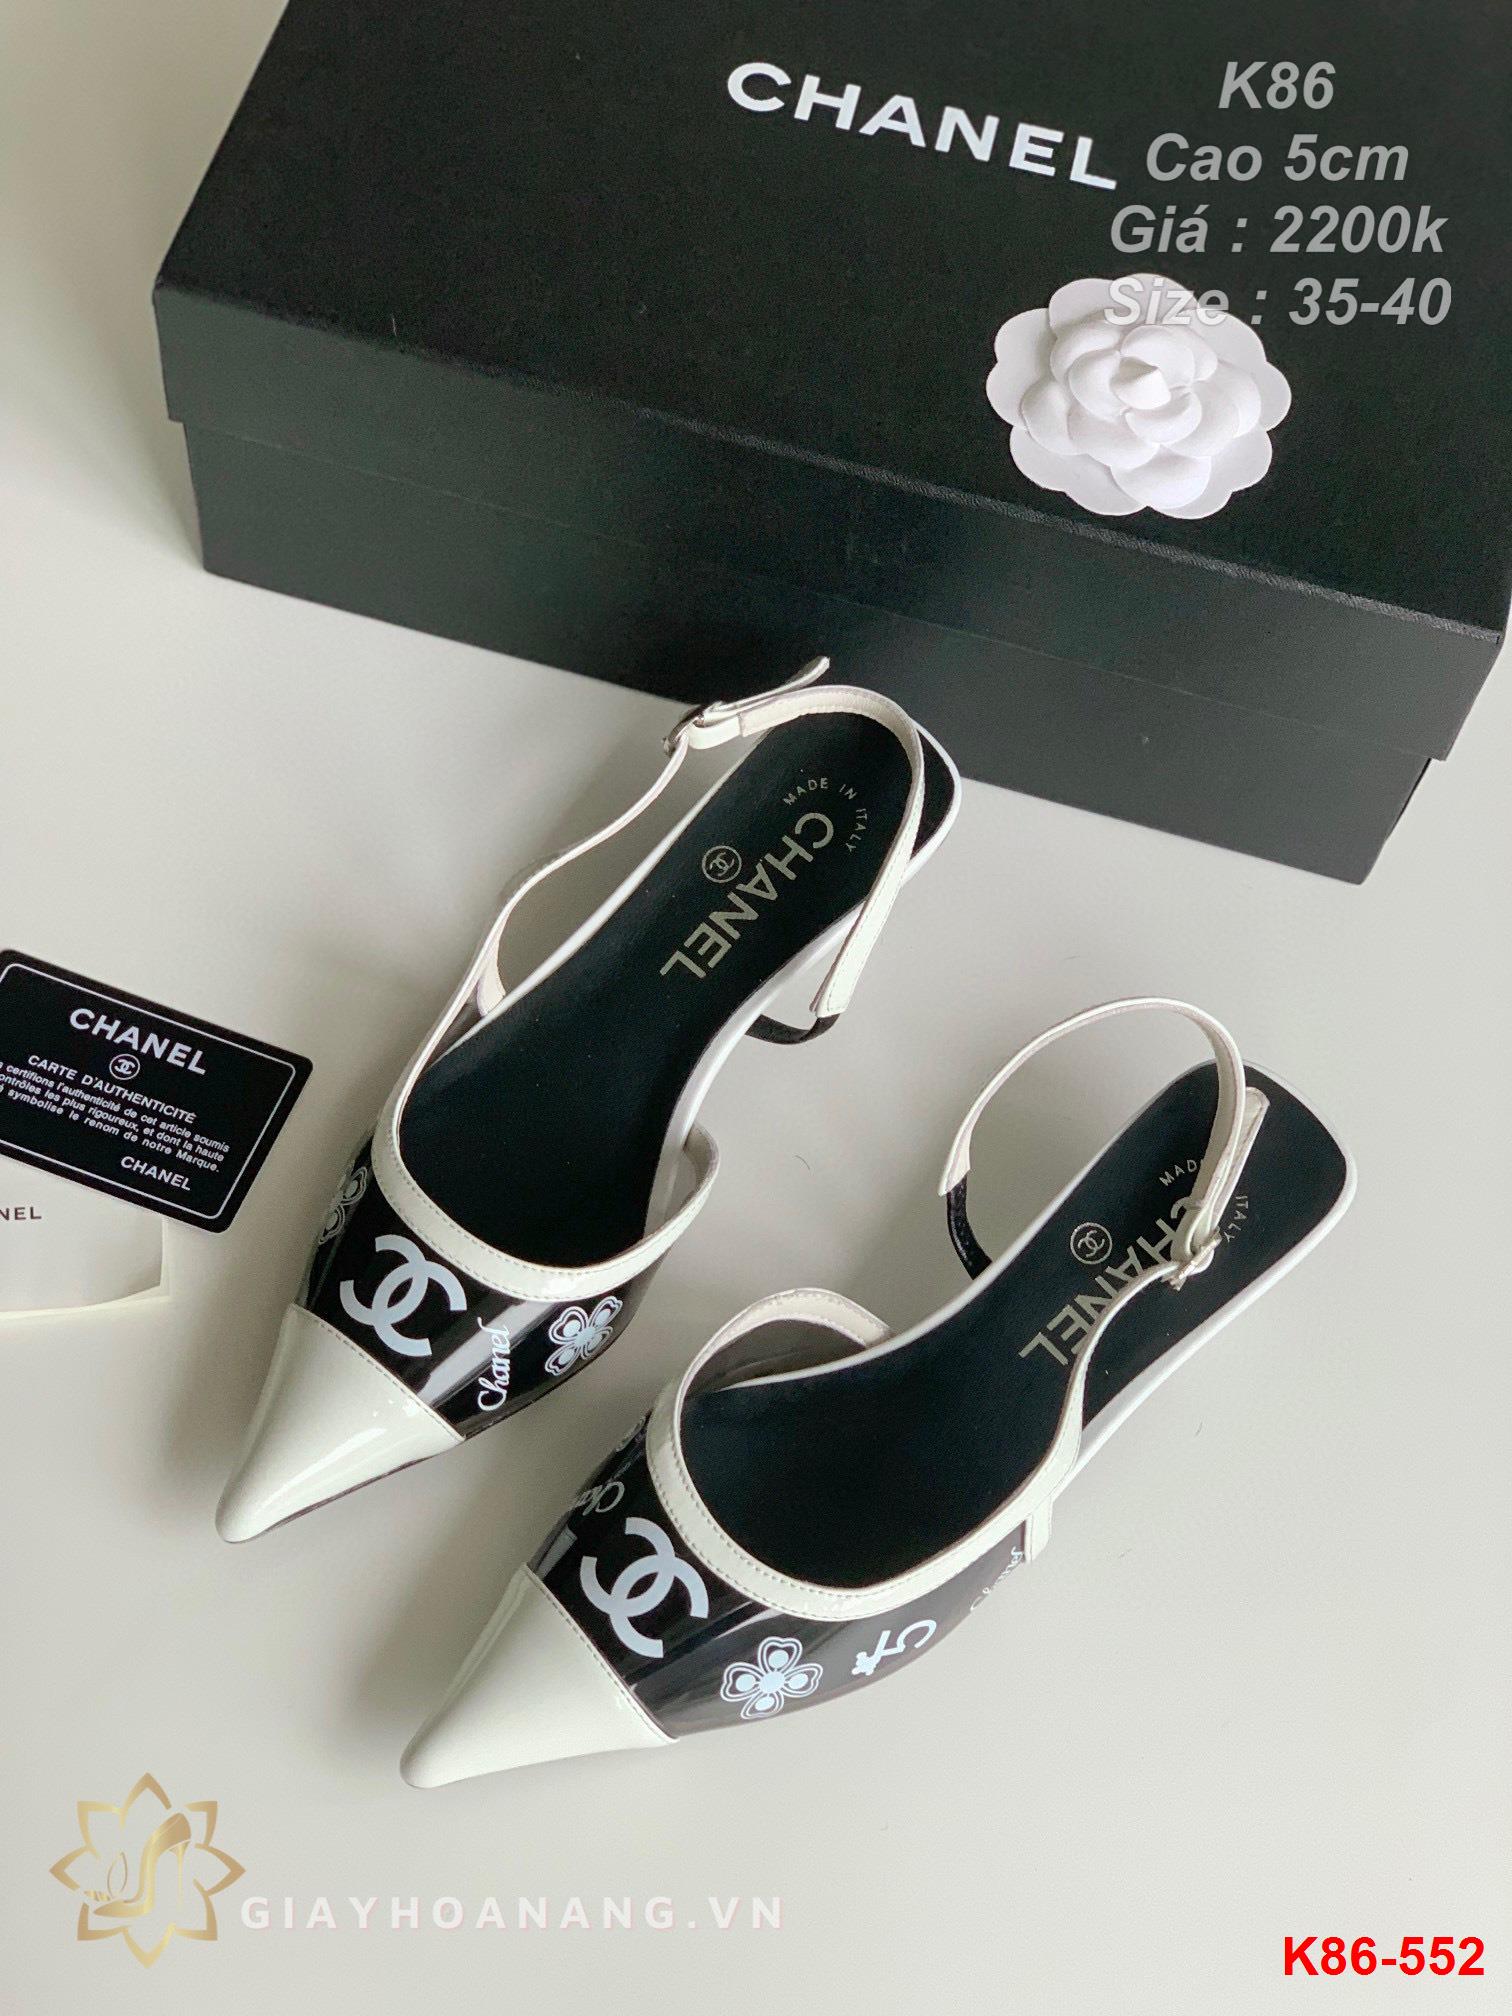 K86-552 Chanel sandal cao 5cm siêu cấp